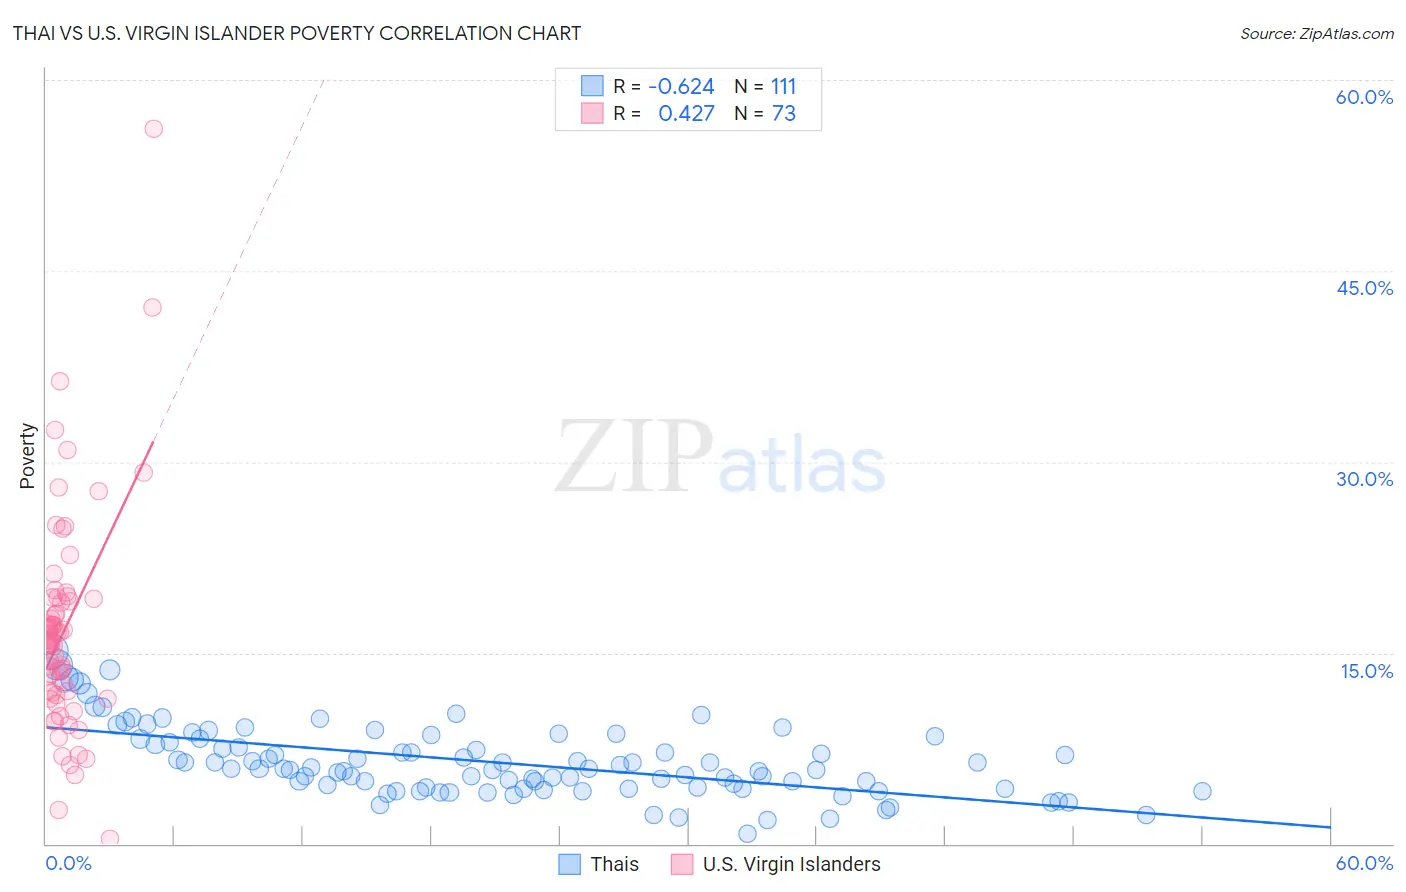 Thai vs U.S. Virgin Islander Poverty